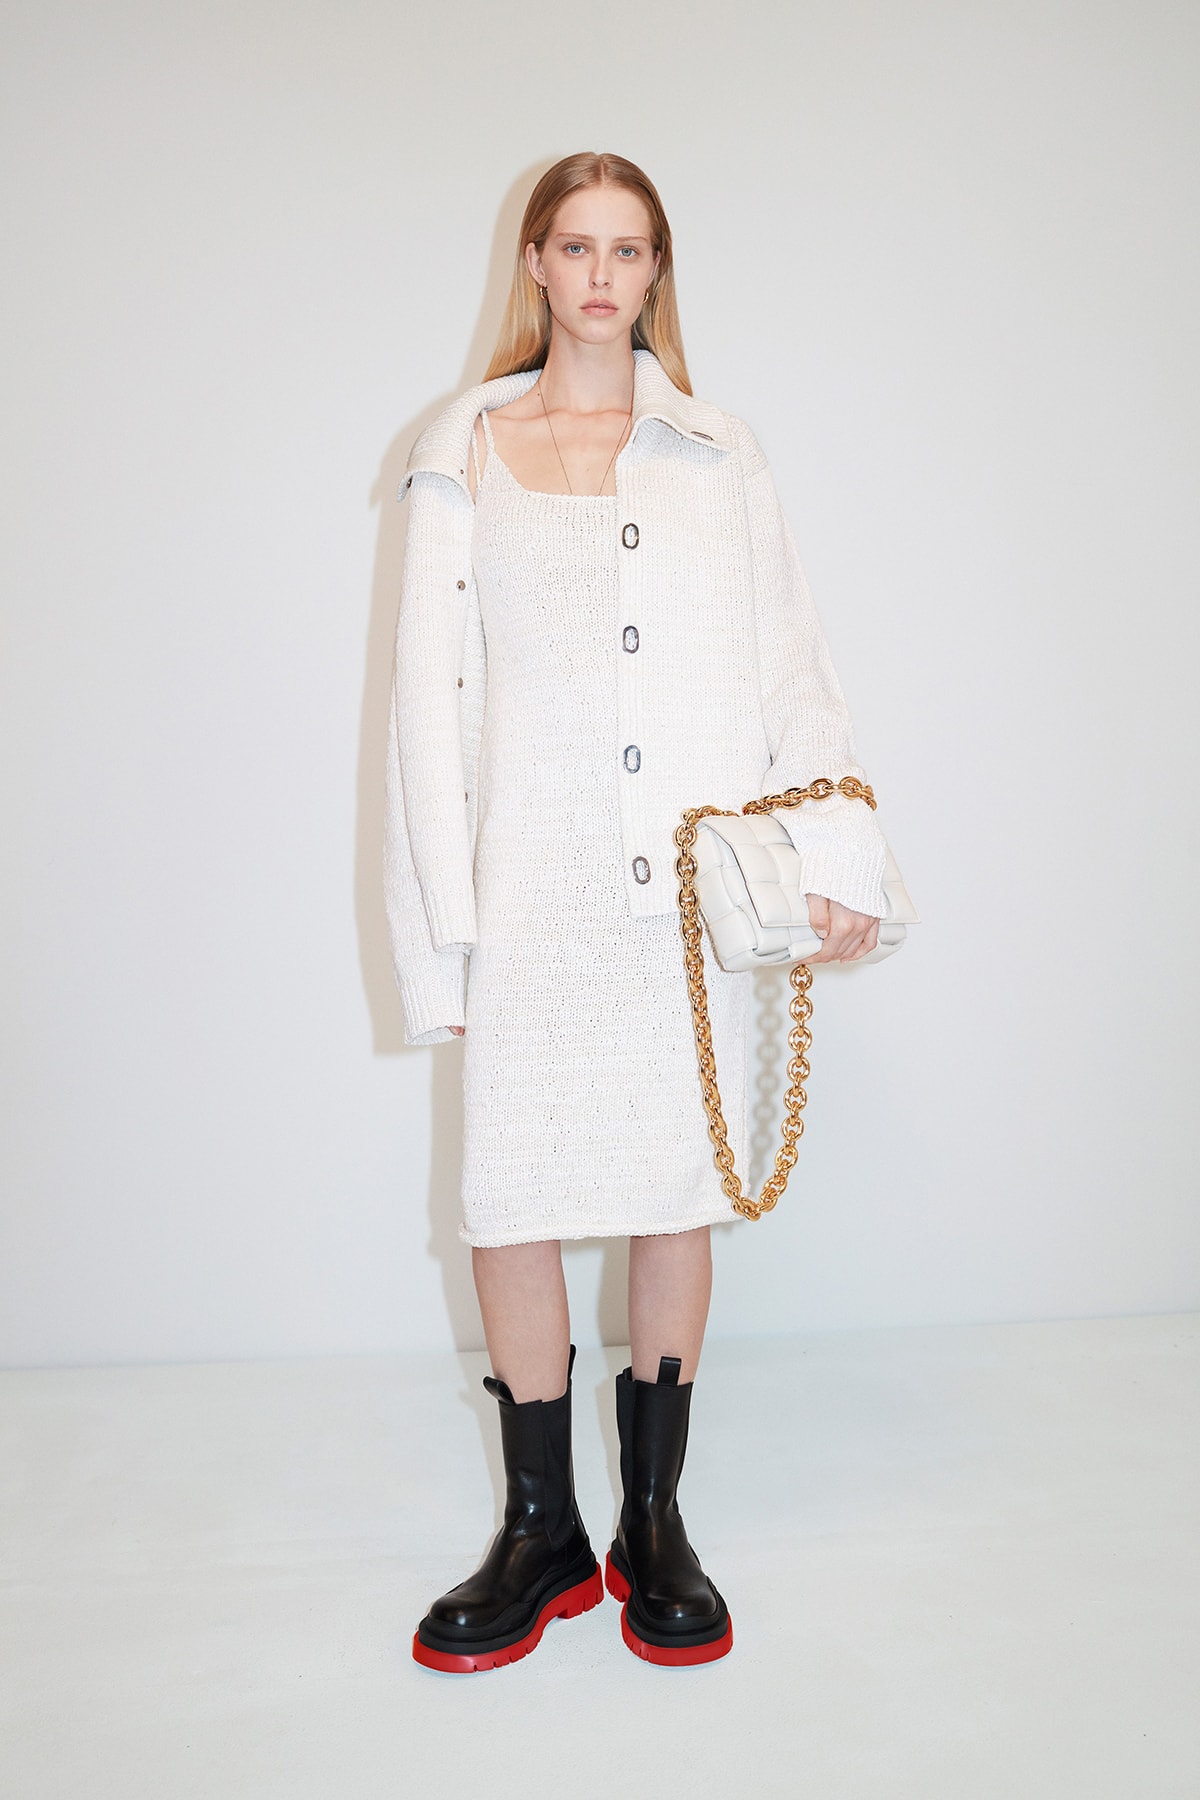 Bottega Veneta Pre-Fall 2020 Collection Lookbook Midi Dress White Shirt